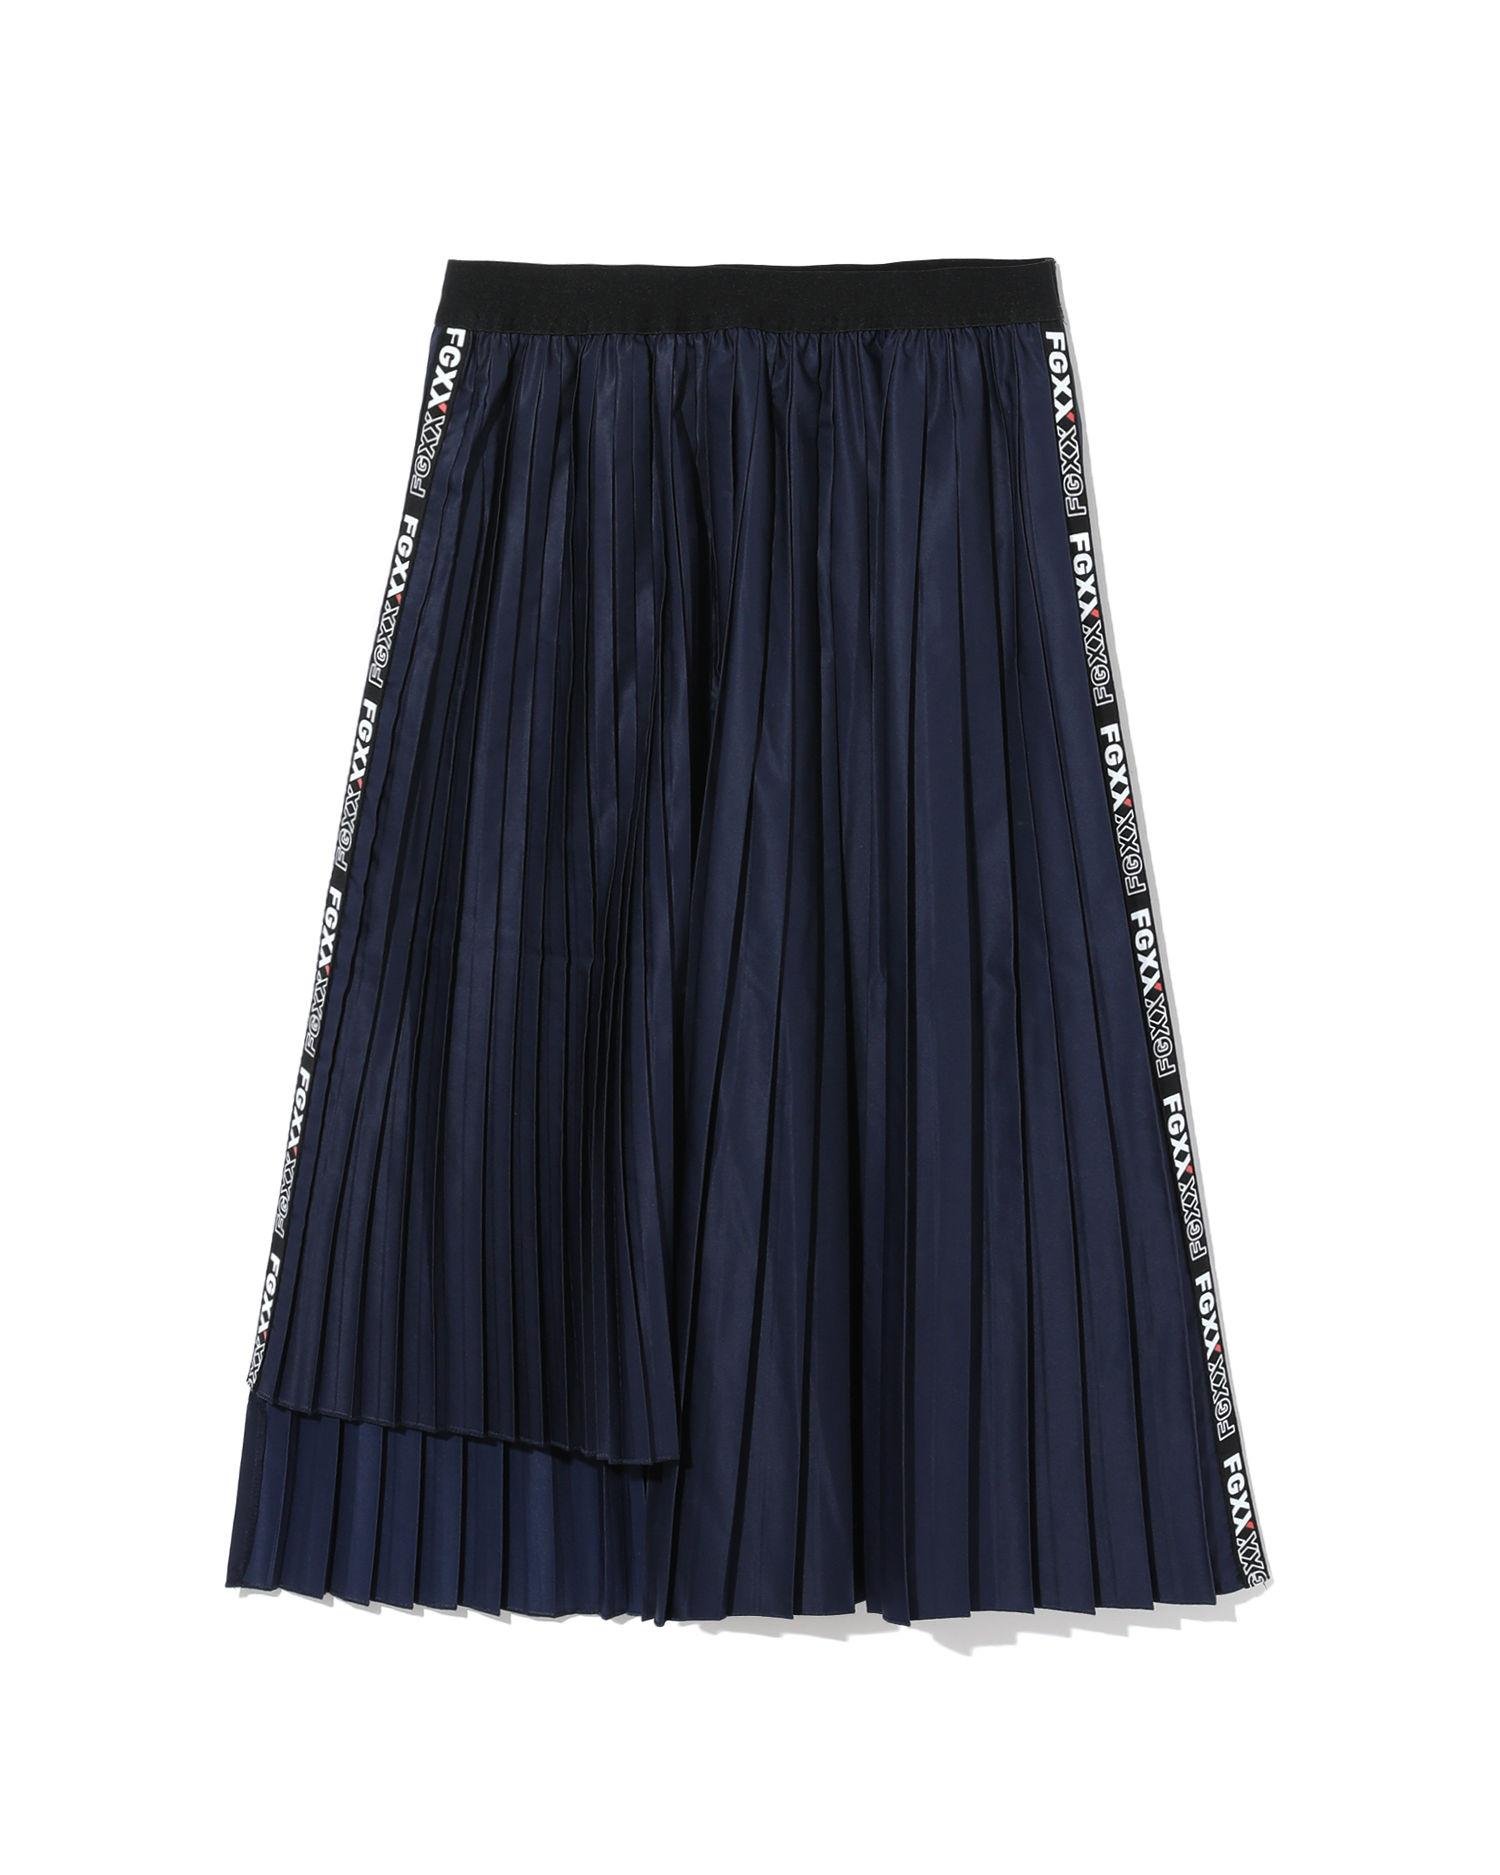 Asymmetric pleated skirt by FINGERCROXX